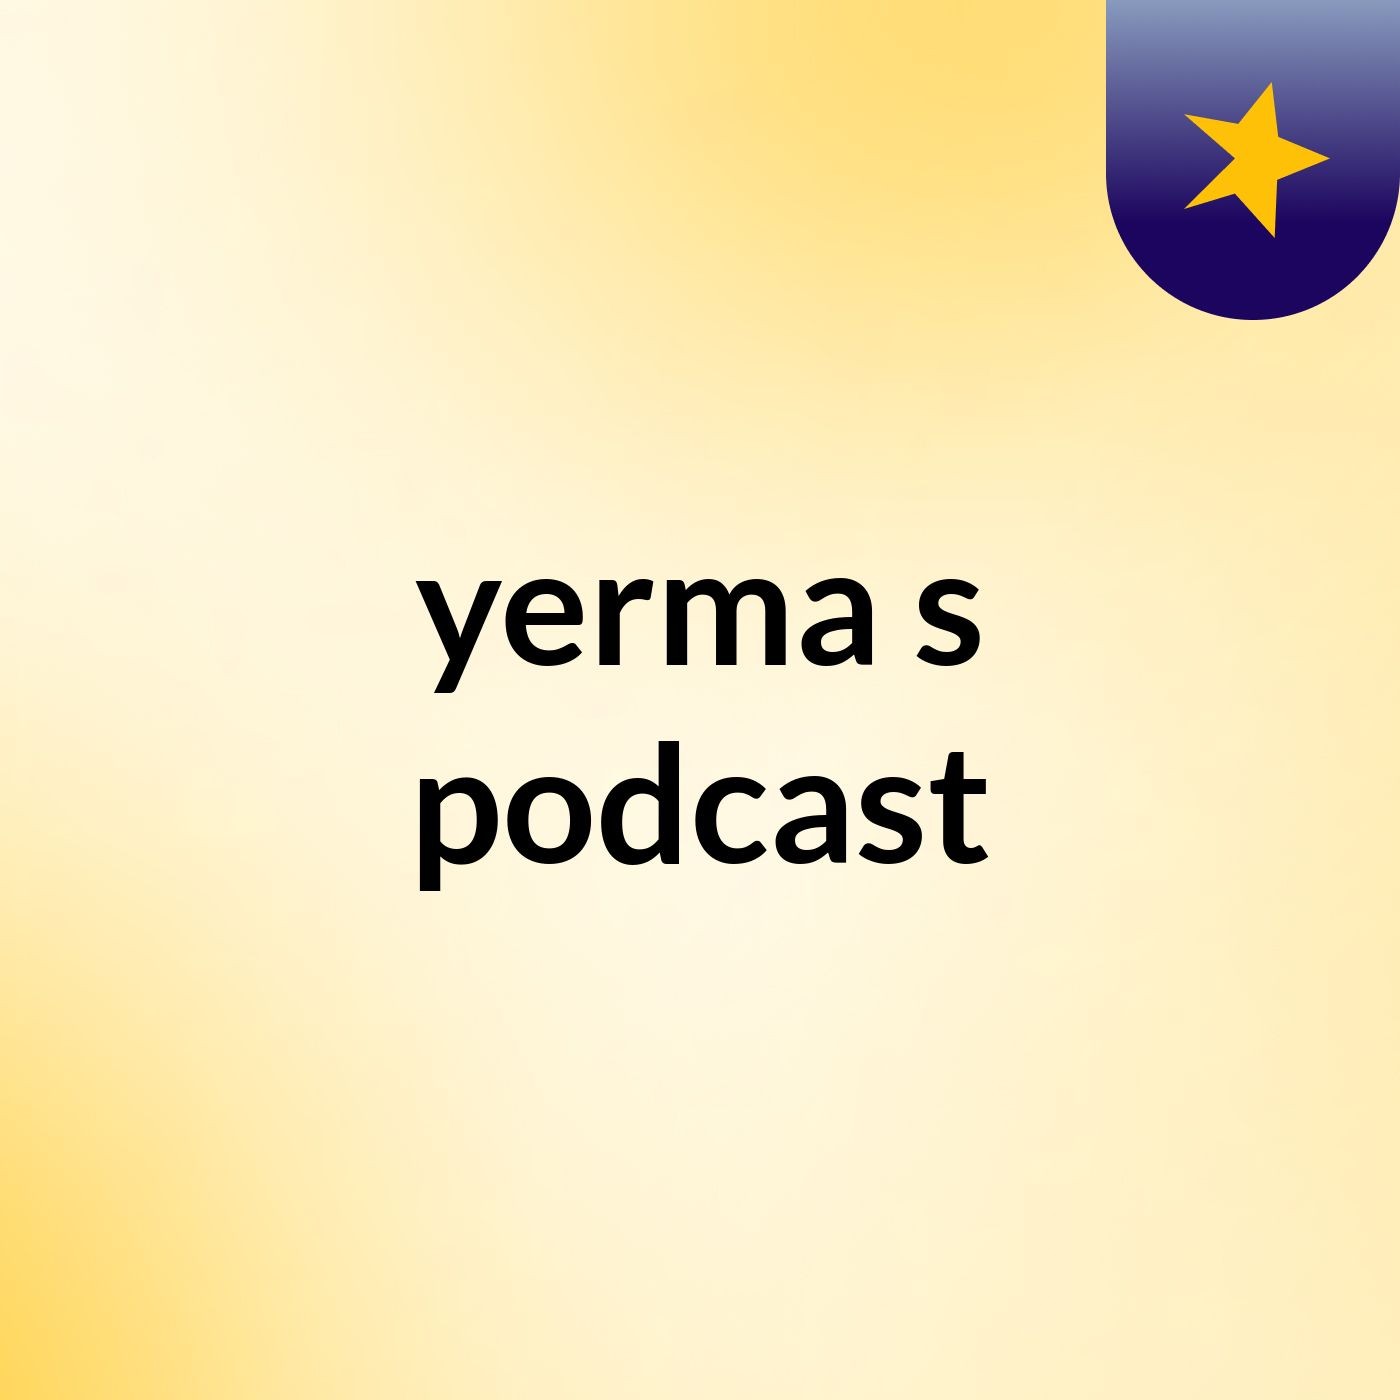 yerma's podcast